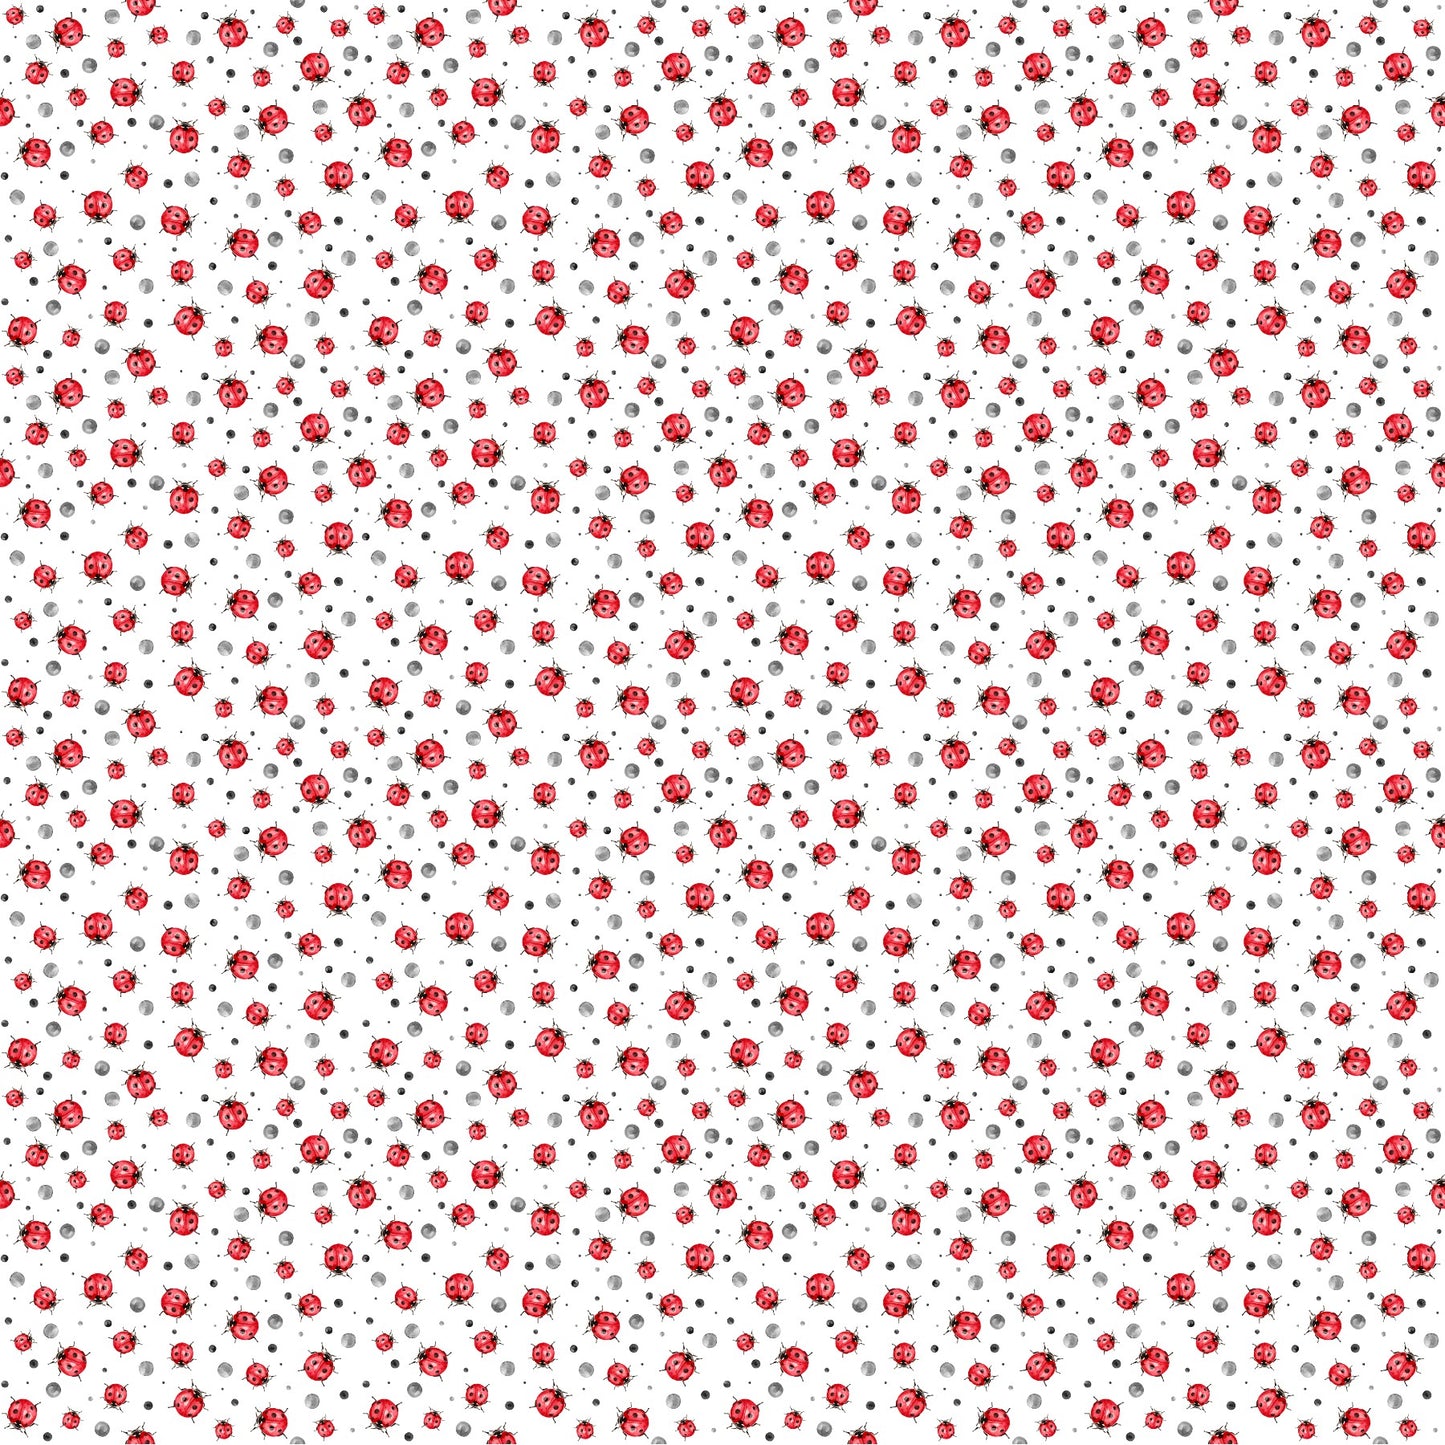 Ladybug Polka Dot - Adhesive Vinyl